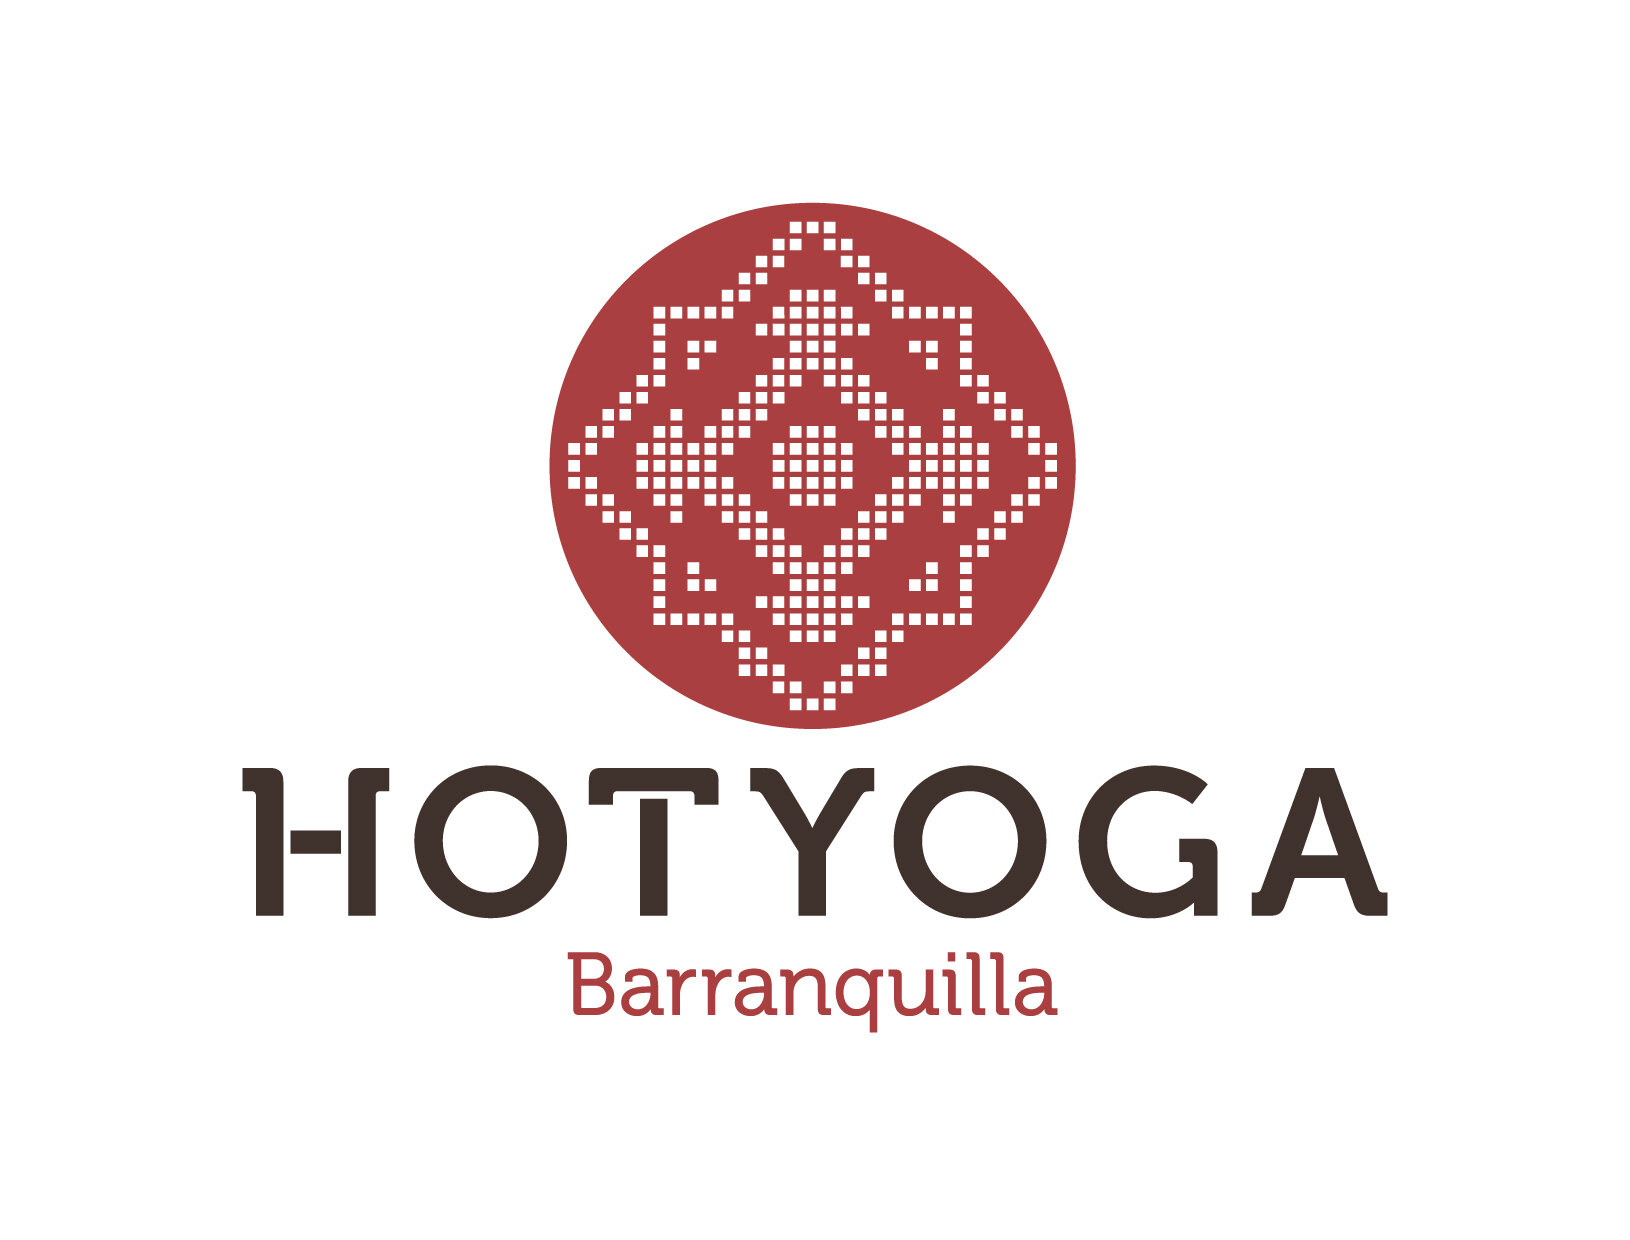 HOT YOGA Barranquilla